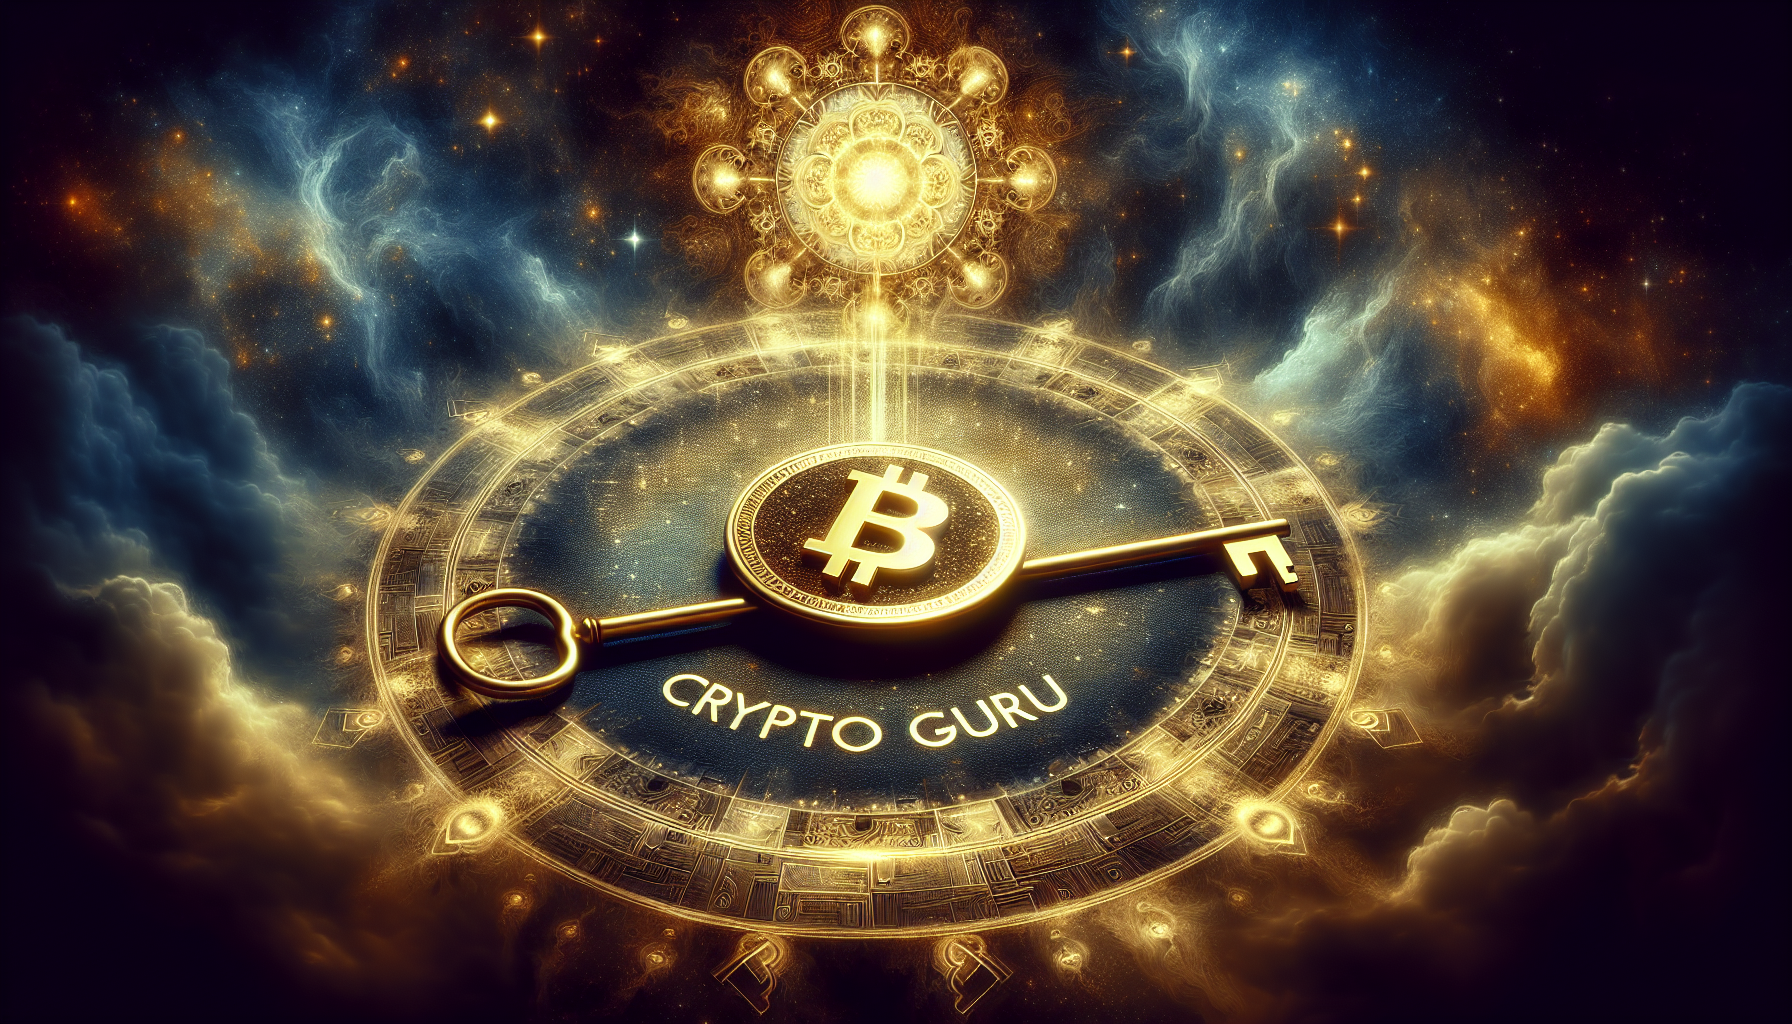 Who is the Crypto Guru?